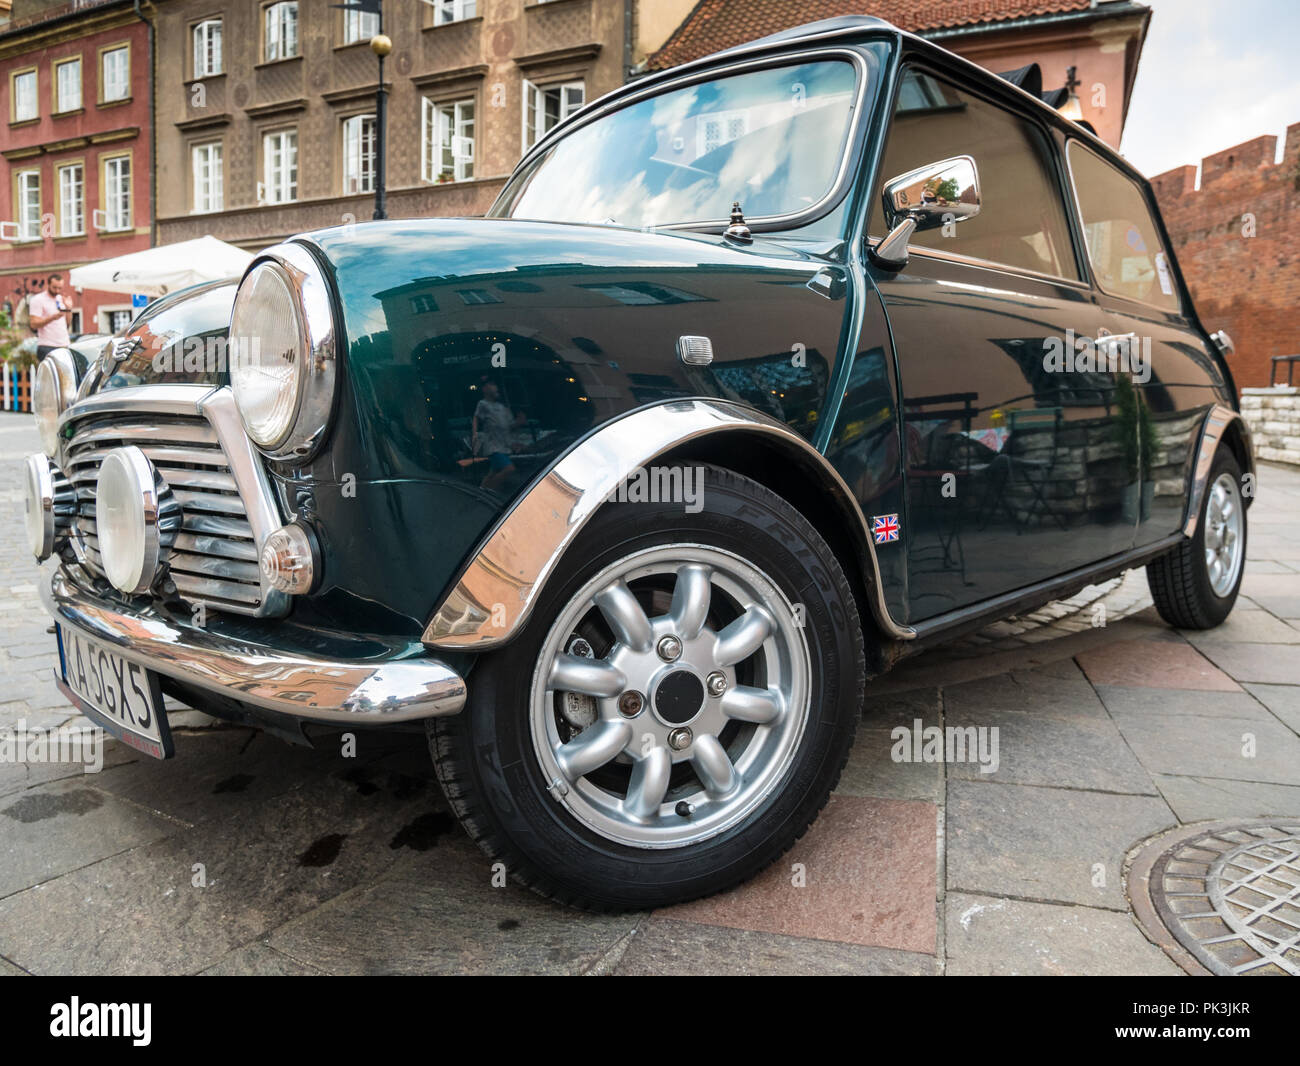 Cooper Mini, Old City, Warsaw, Poland Stock Photo - Alamy